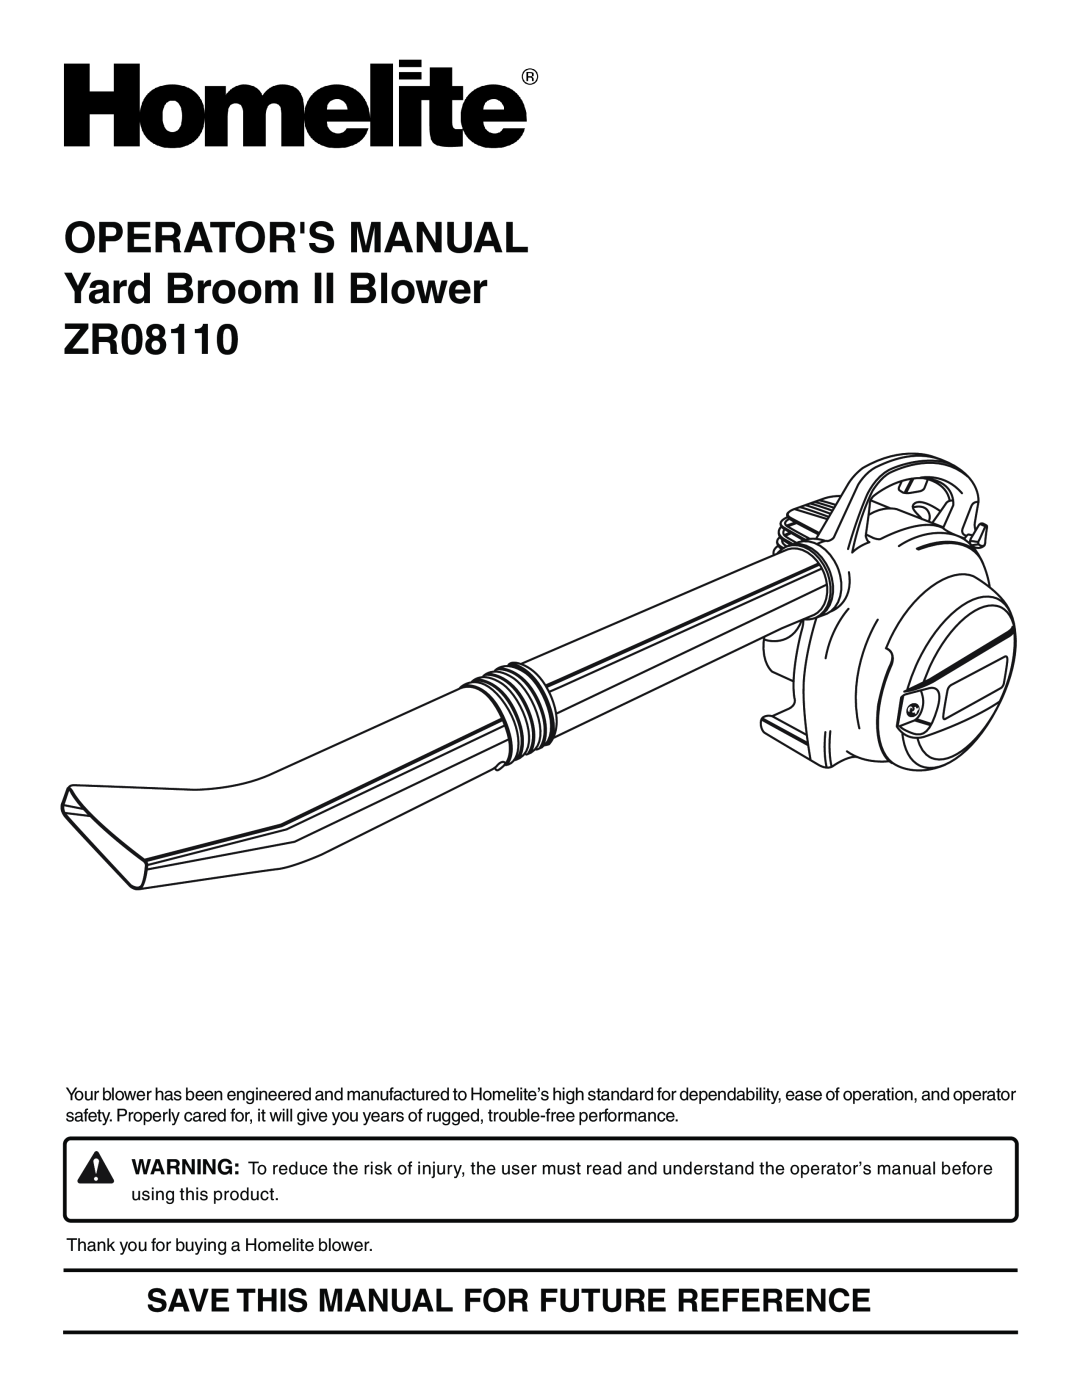 Homelite manual OPERATORS MANUAL Yard Broom II Blower ZR08110, Save This Manual For Future Reference 